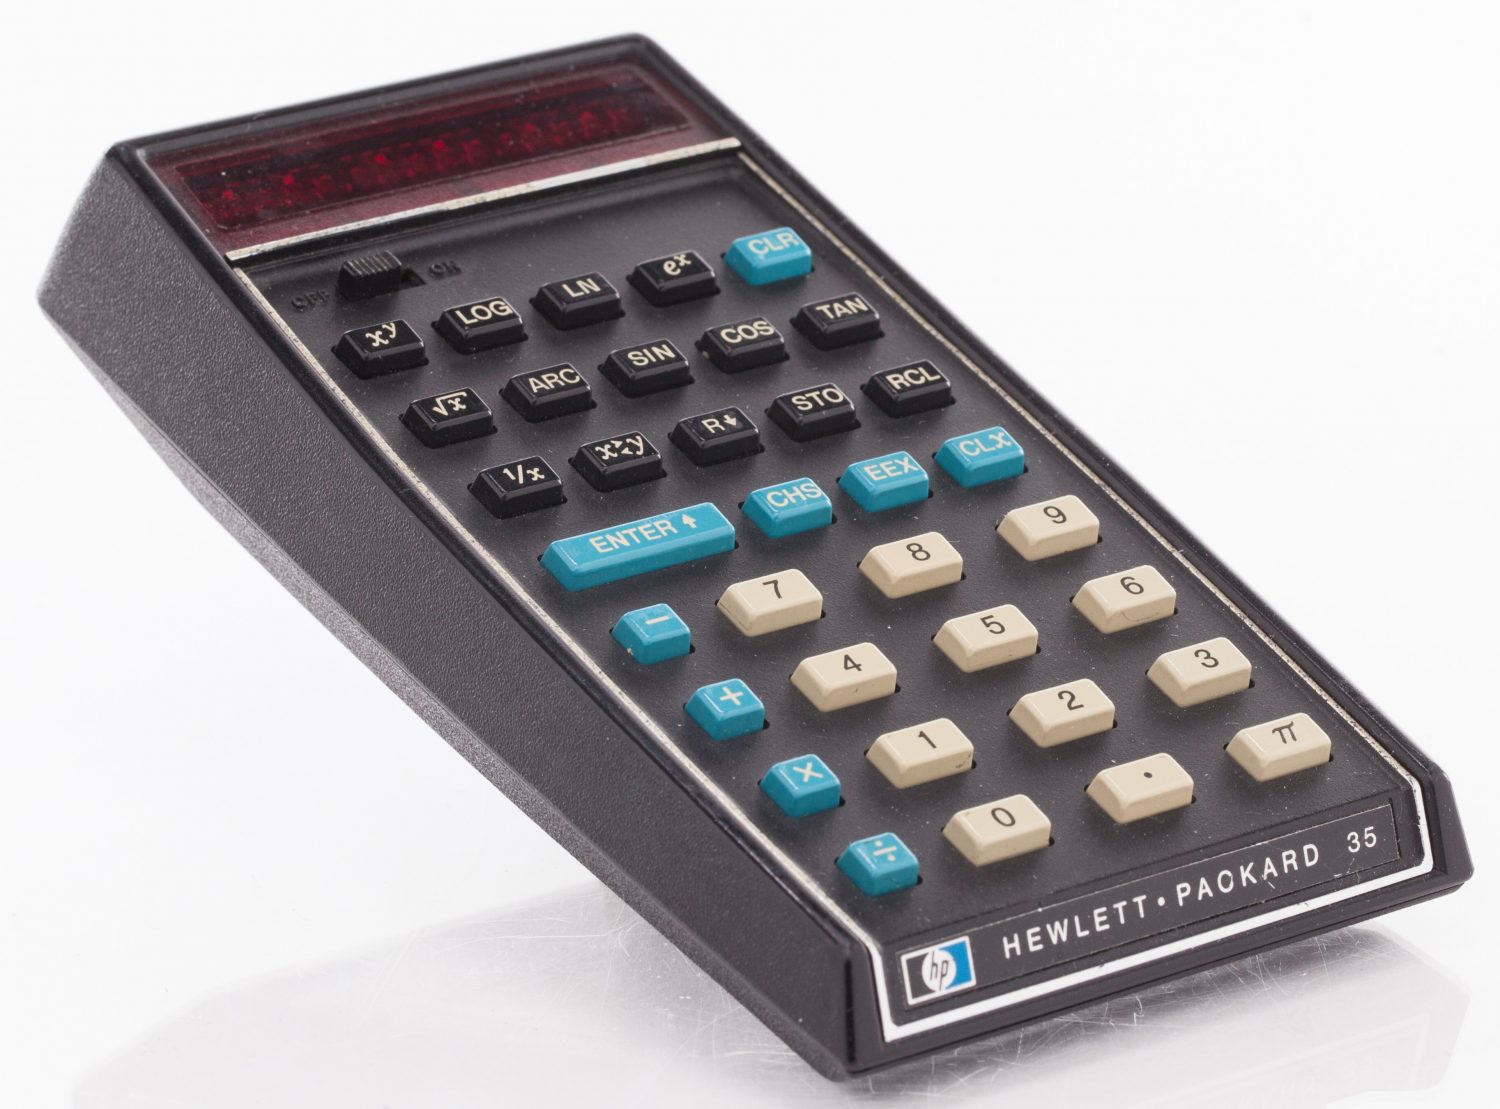 The HP 35 handheld scientific calculator.